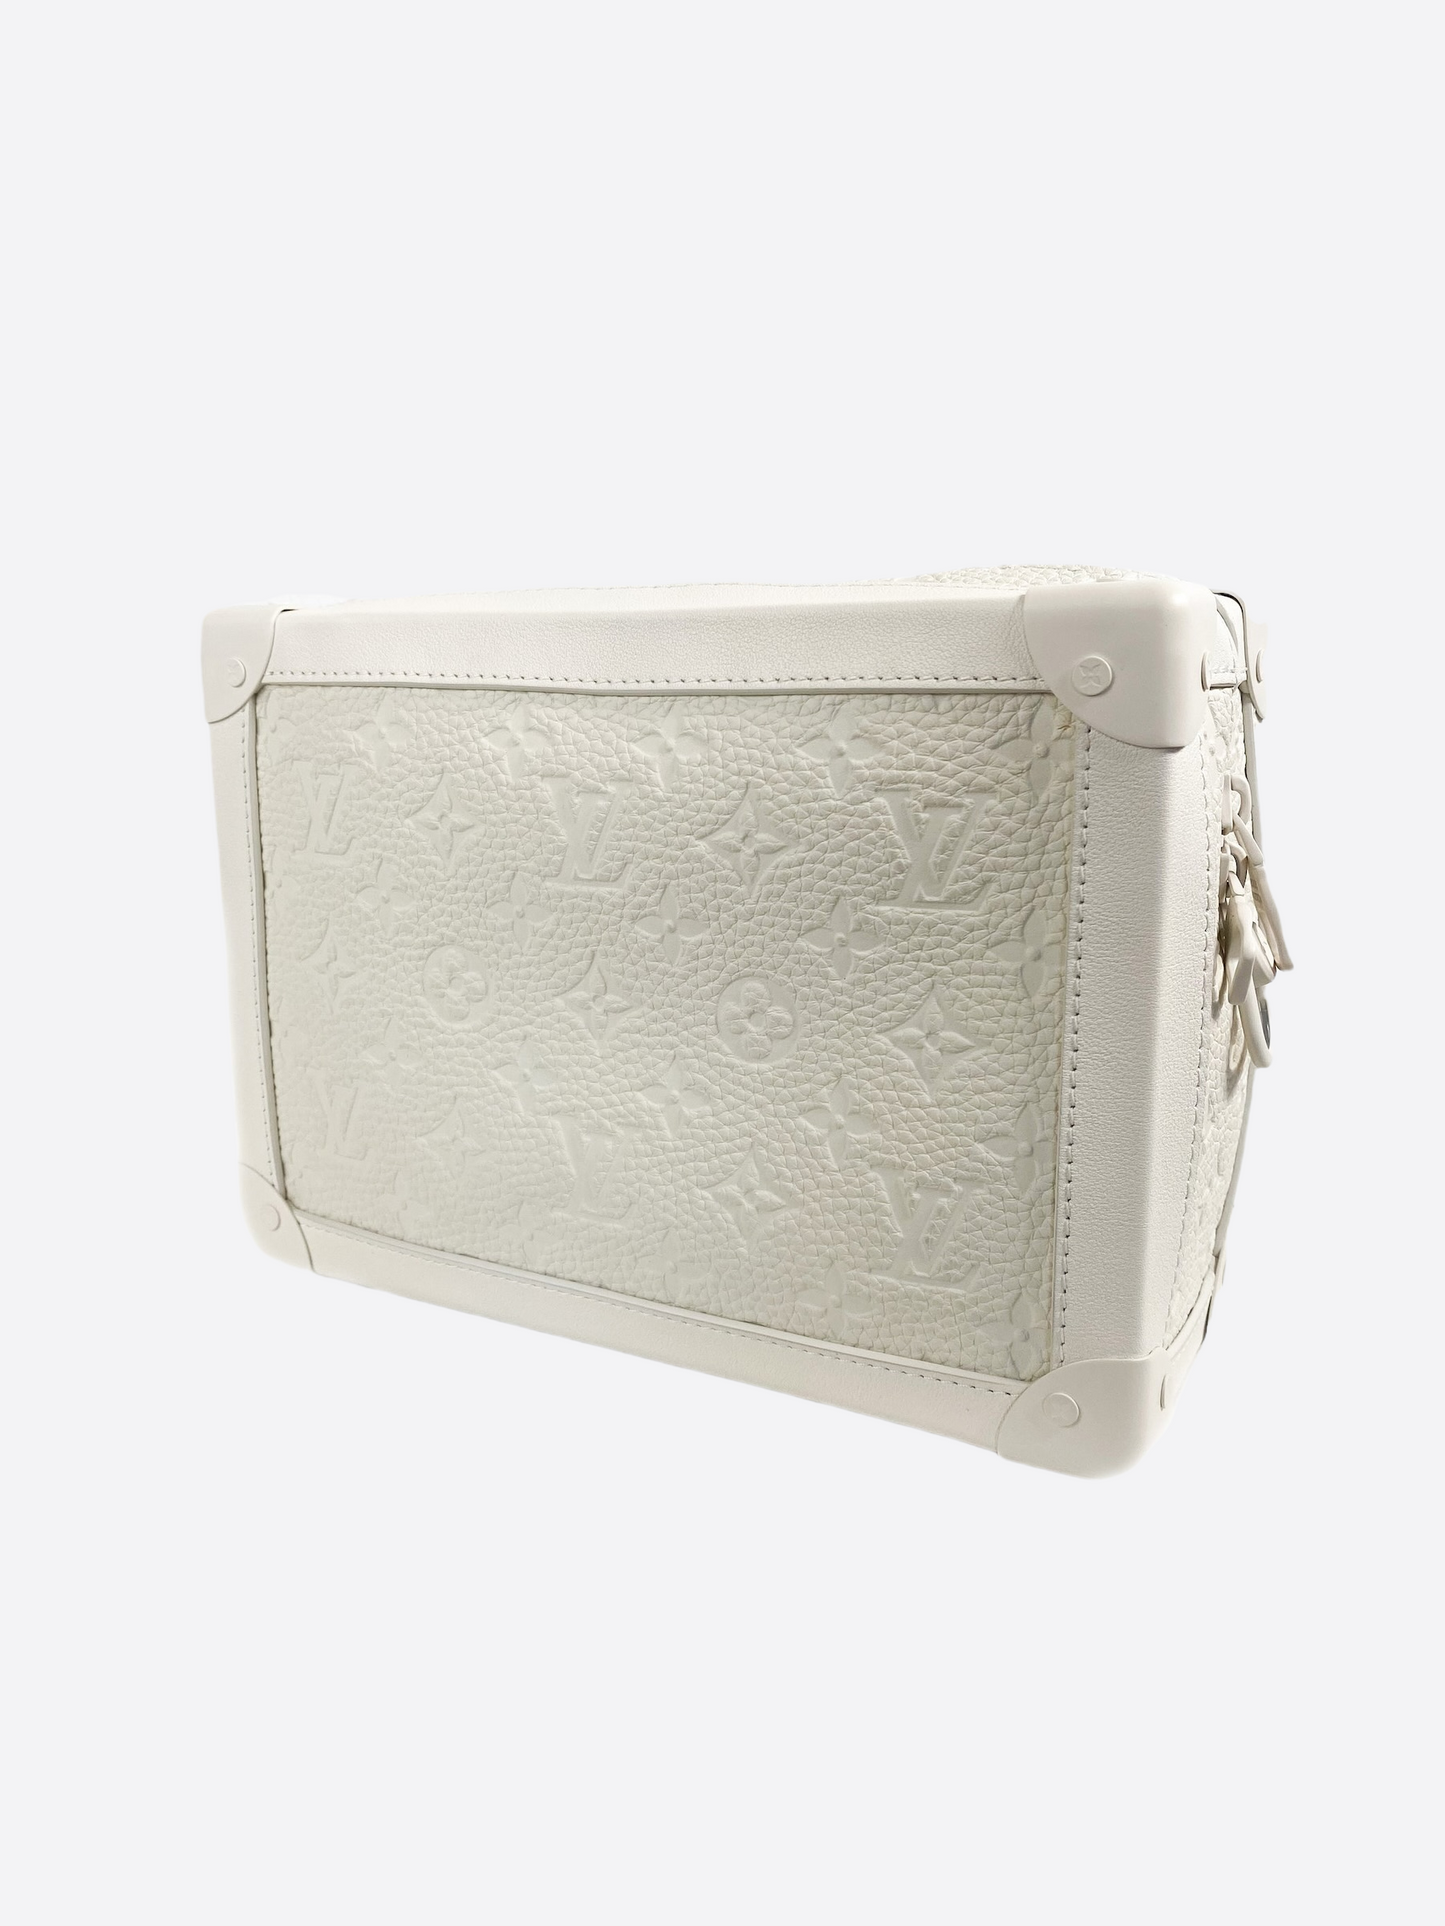 Louis Vuitton Monogram Wallet Trunk in Monogram Powder White